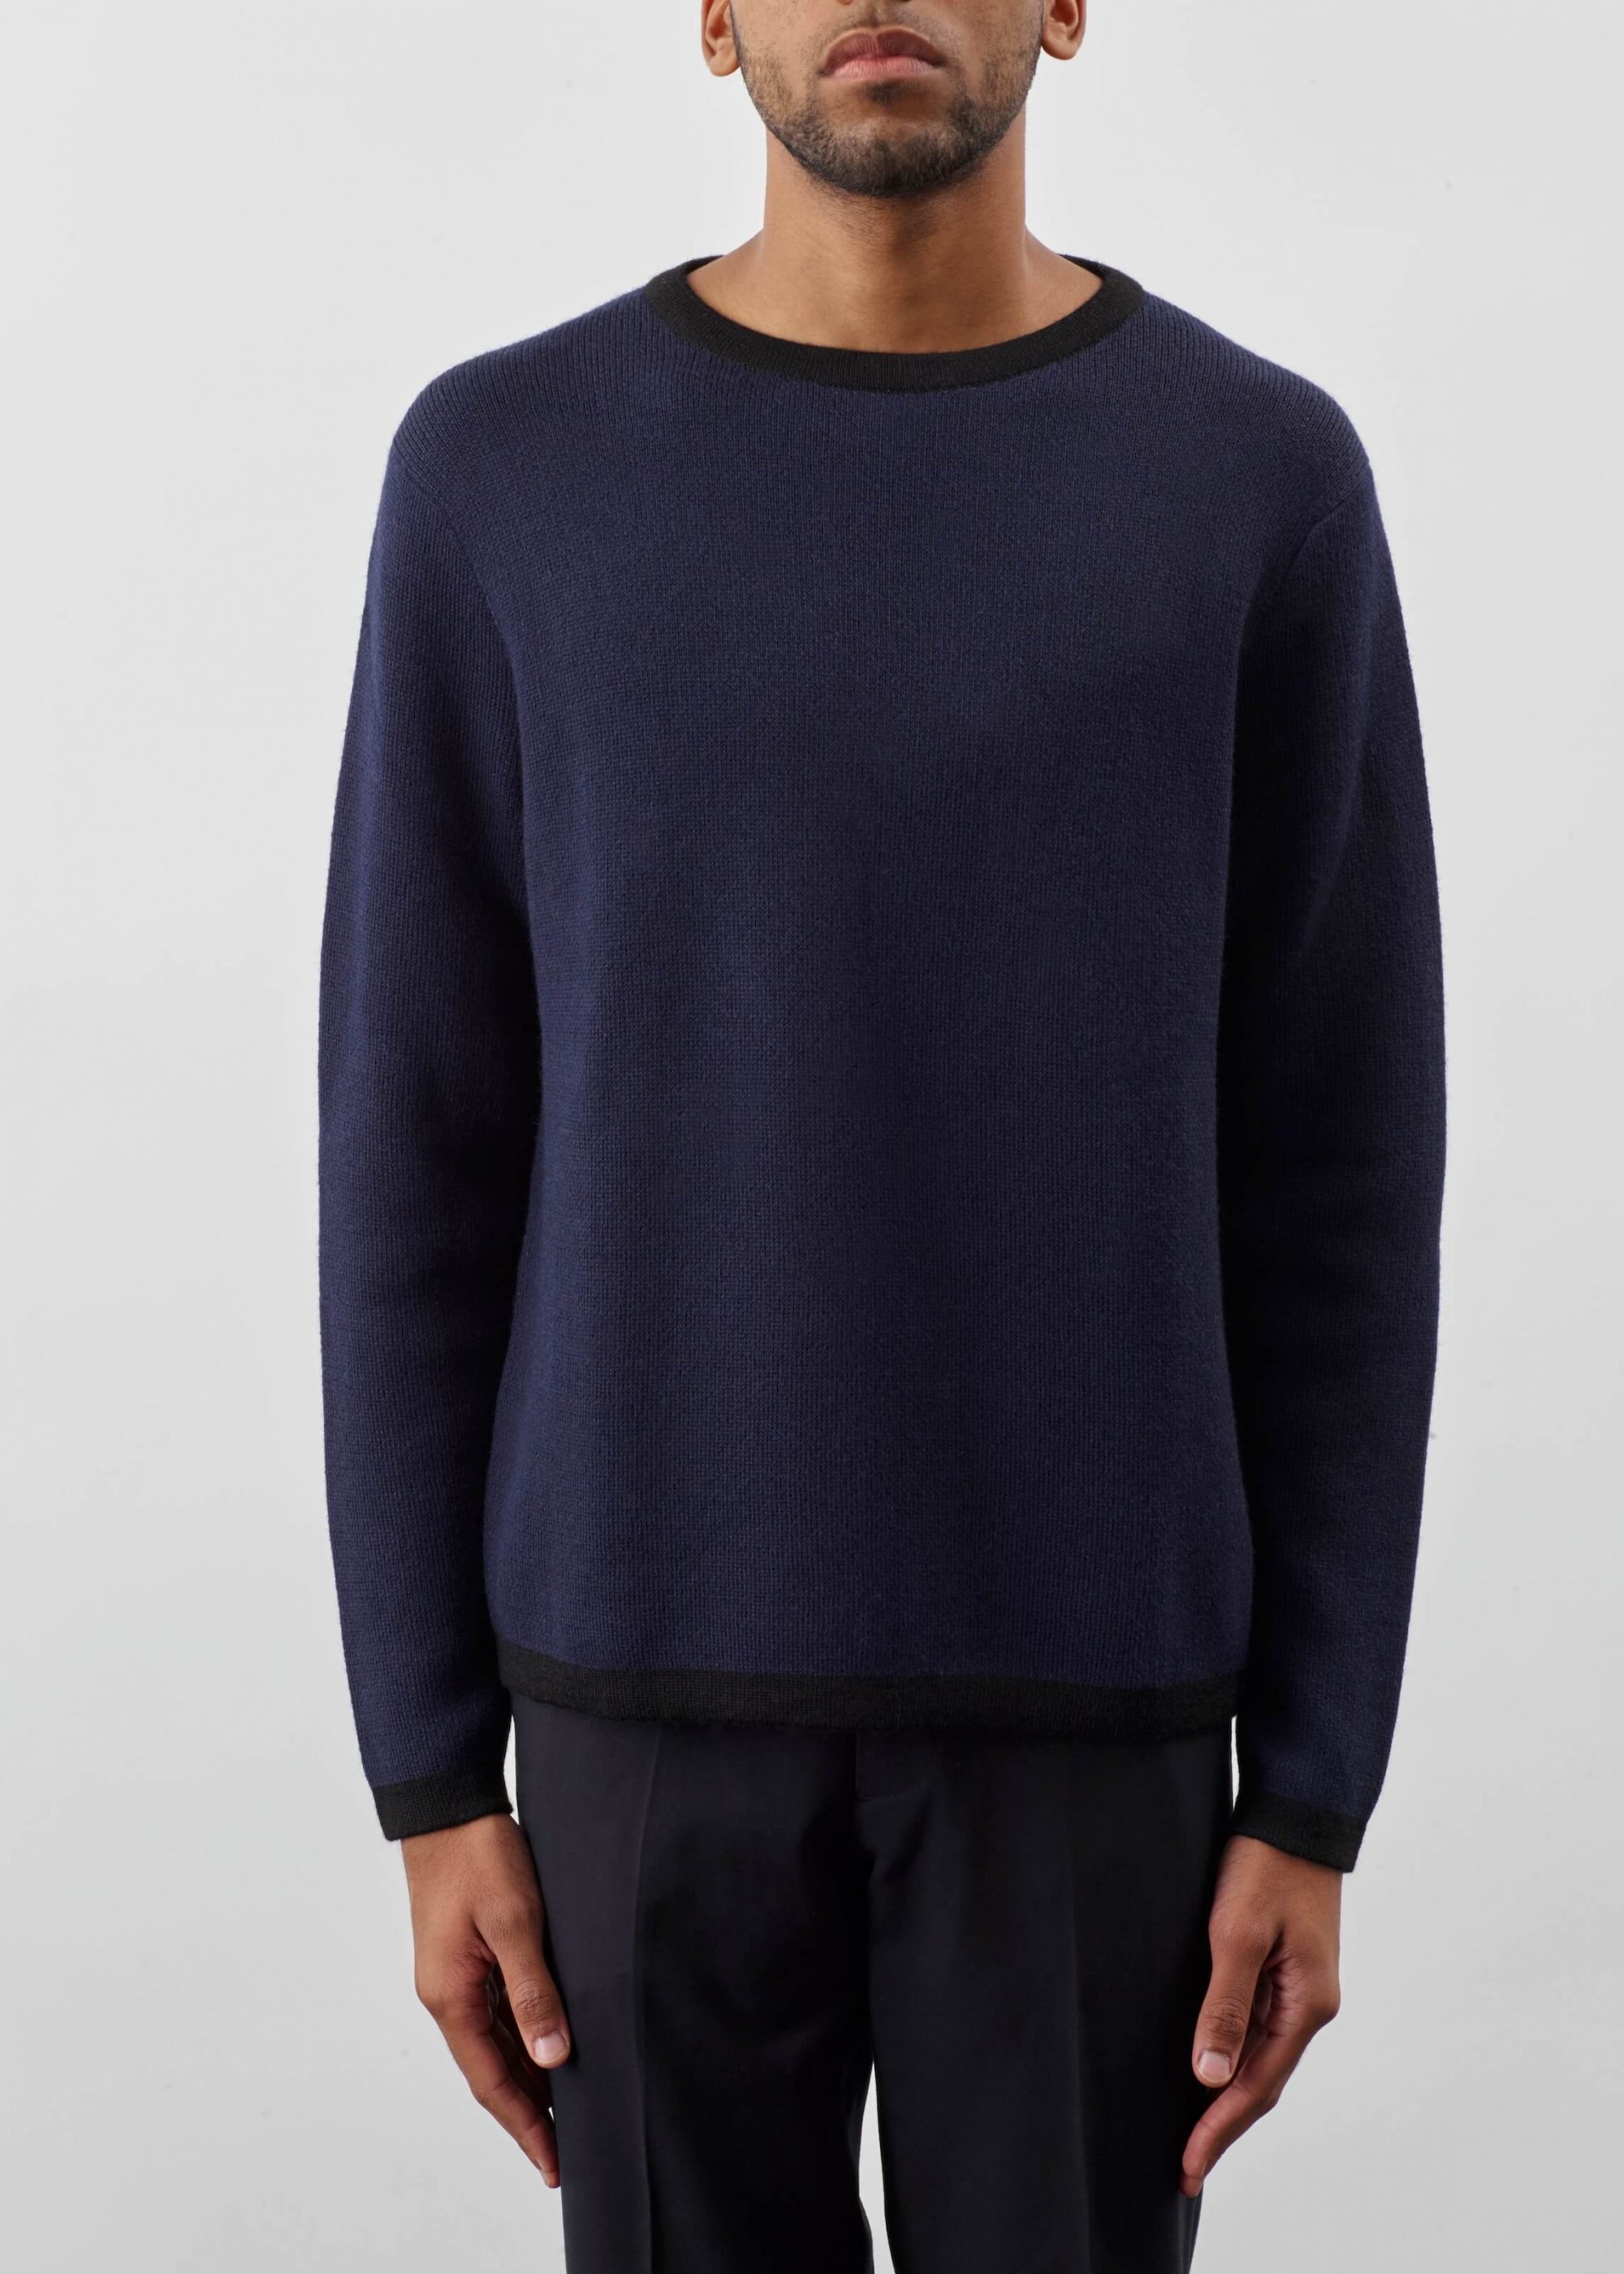 Product image for »Bauhaus« Sweater Baby Alpaca | Navy Black